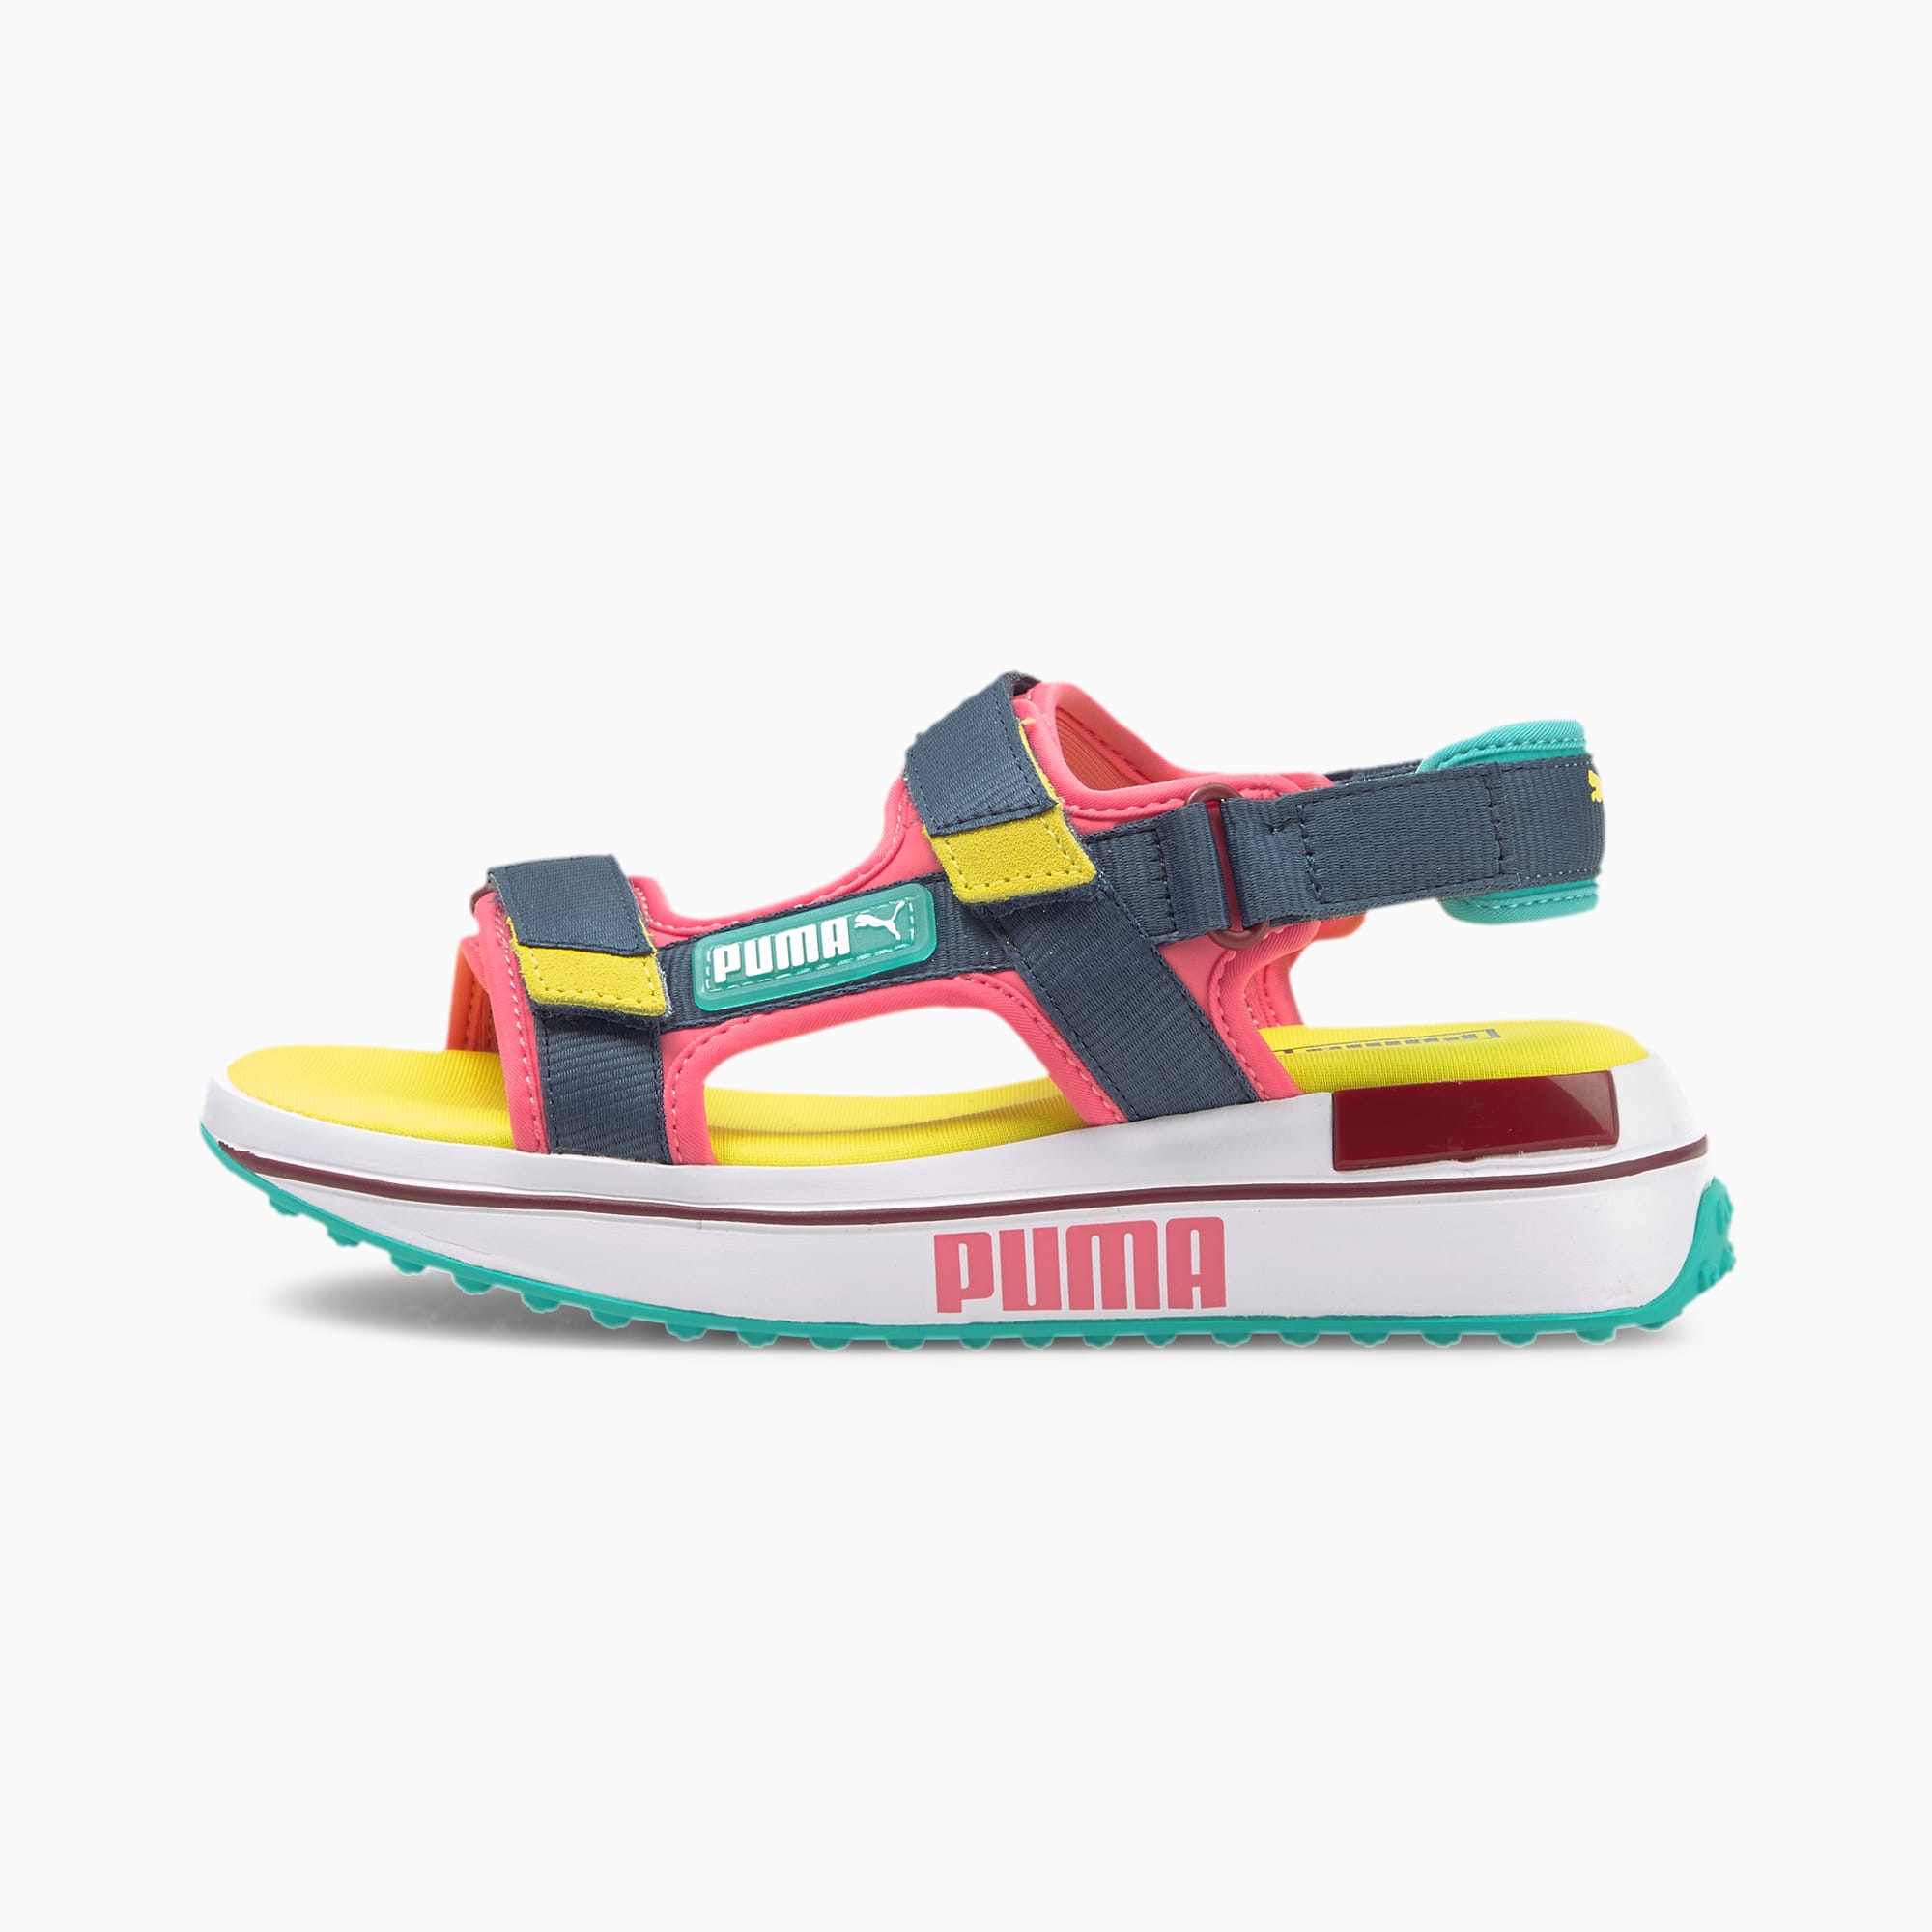 puma sandals for kids